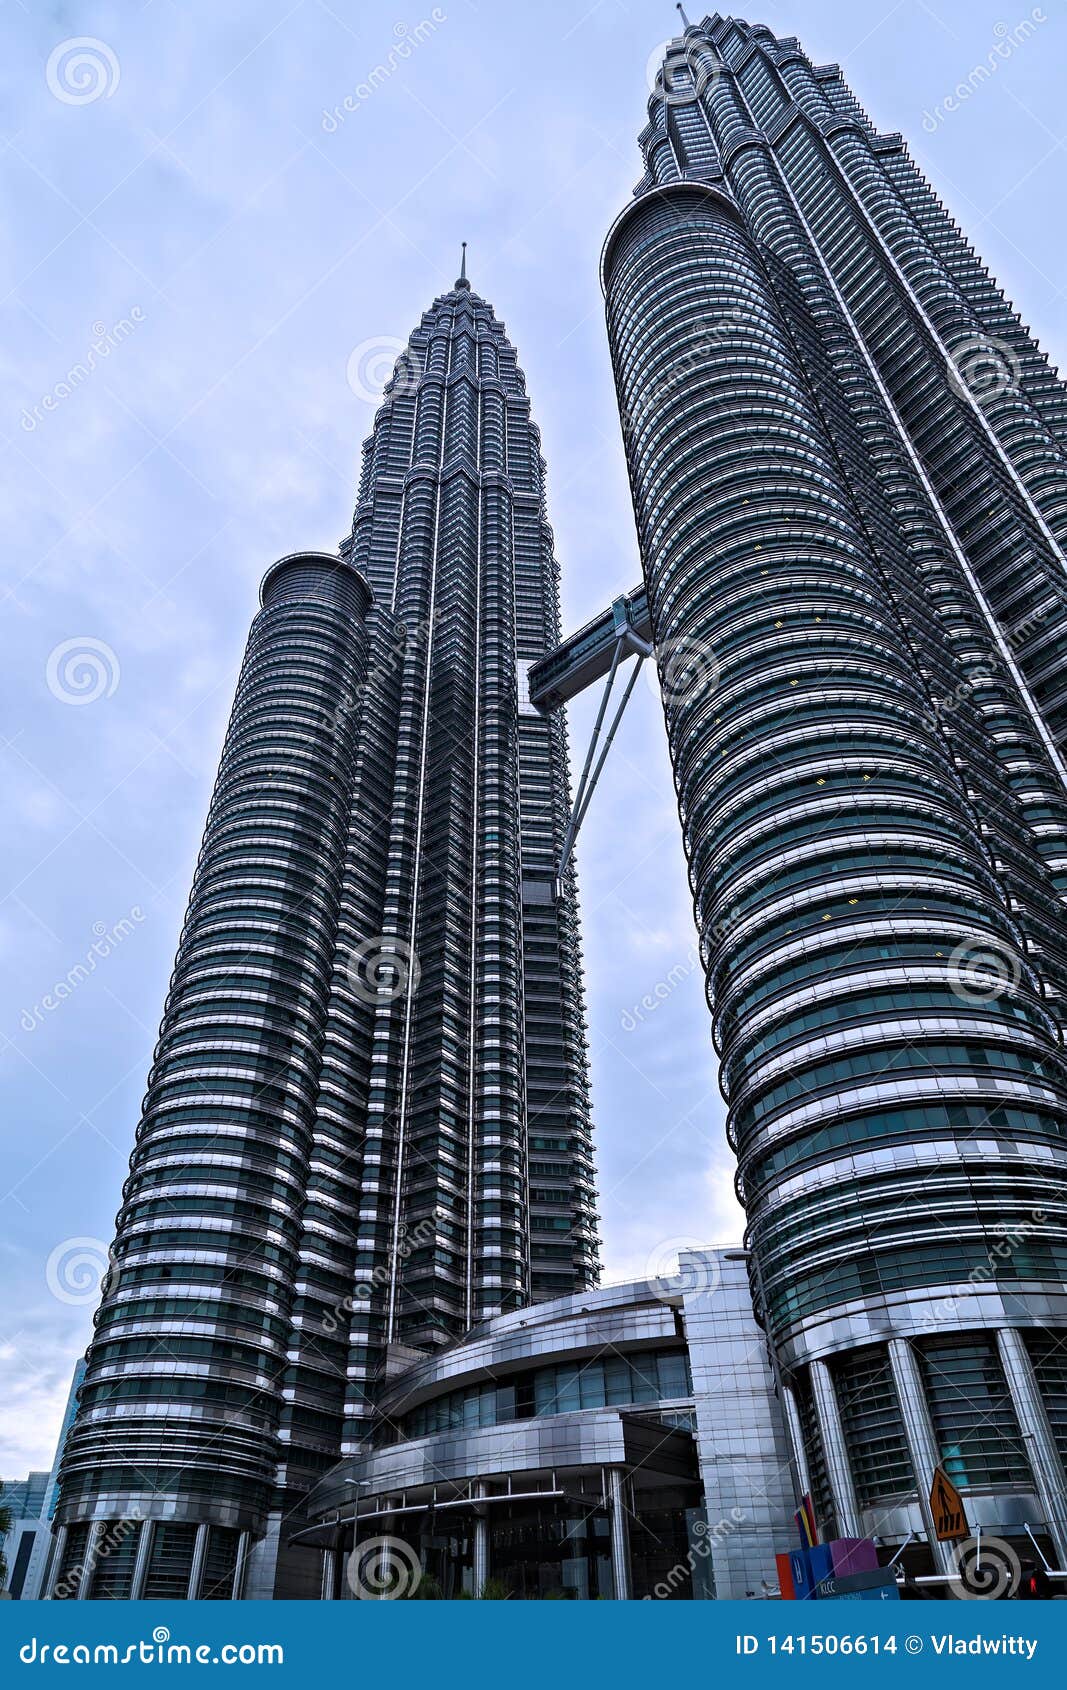 Petronas Klcc Twin Towers Buildings Are A Landmark Of Kuala